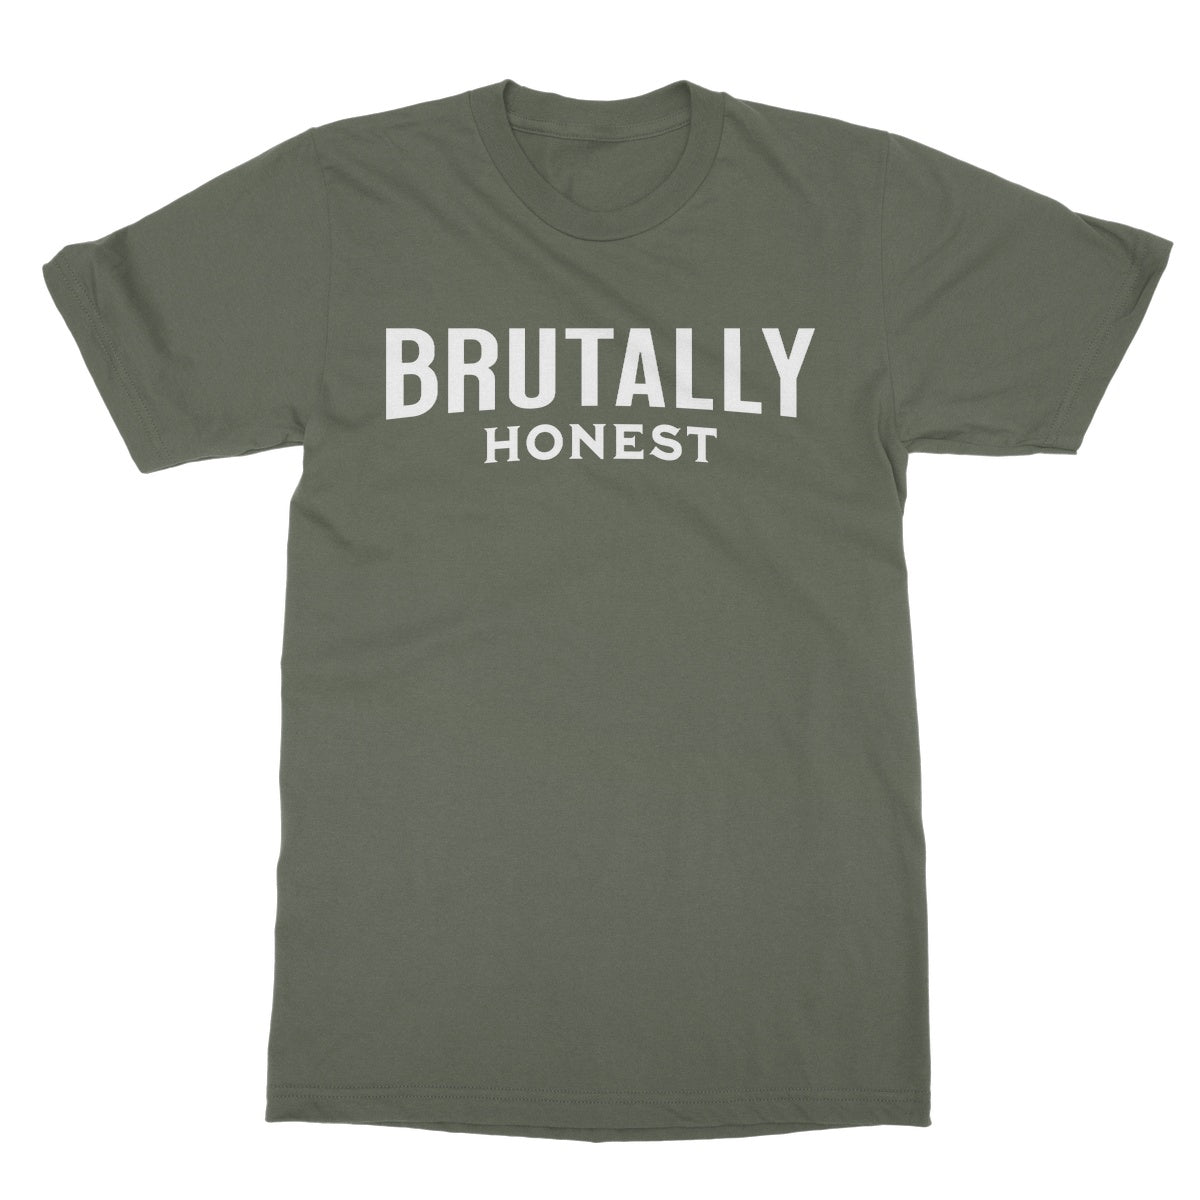 brutally honest t shirt green